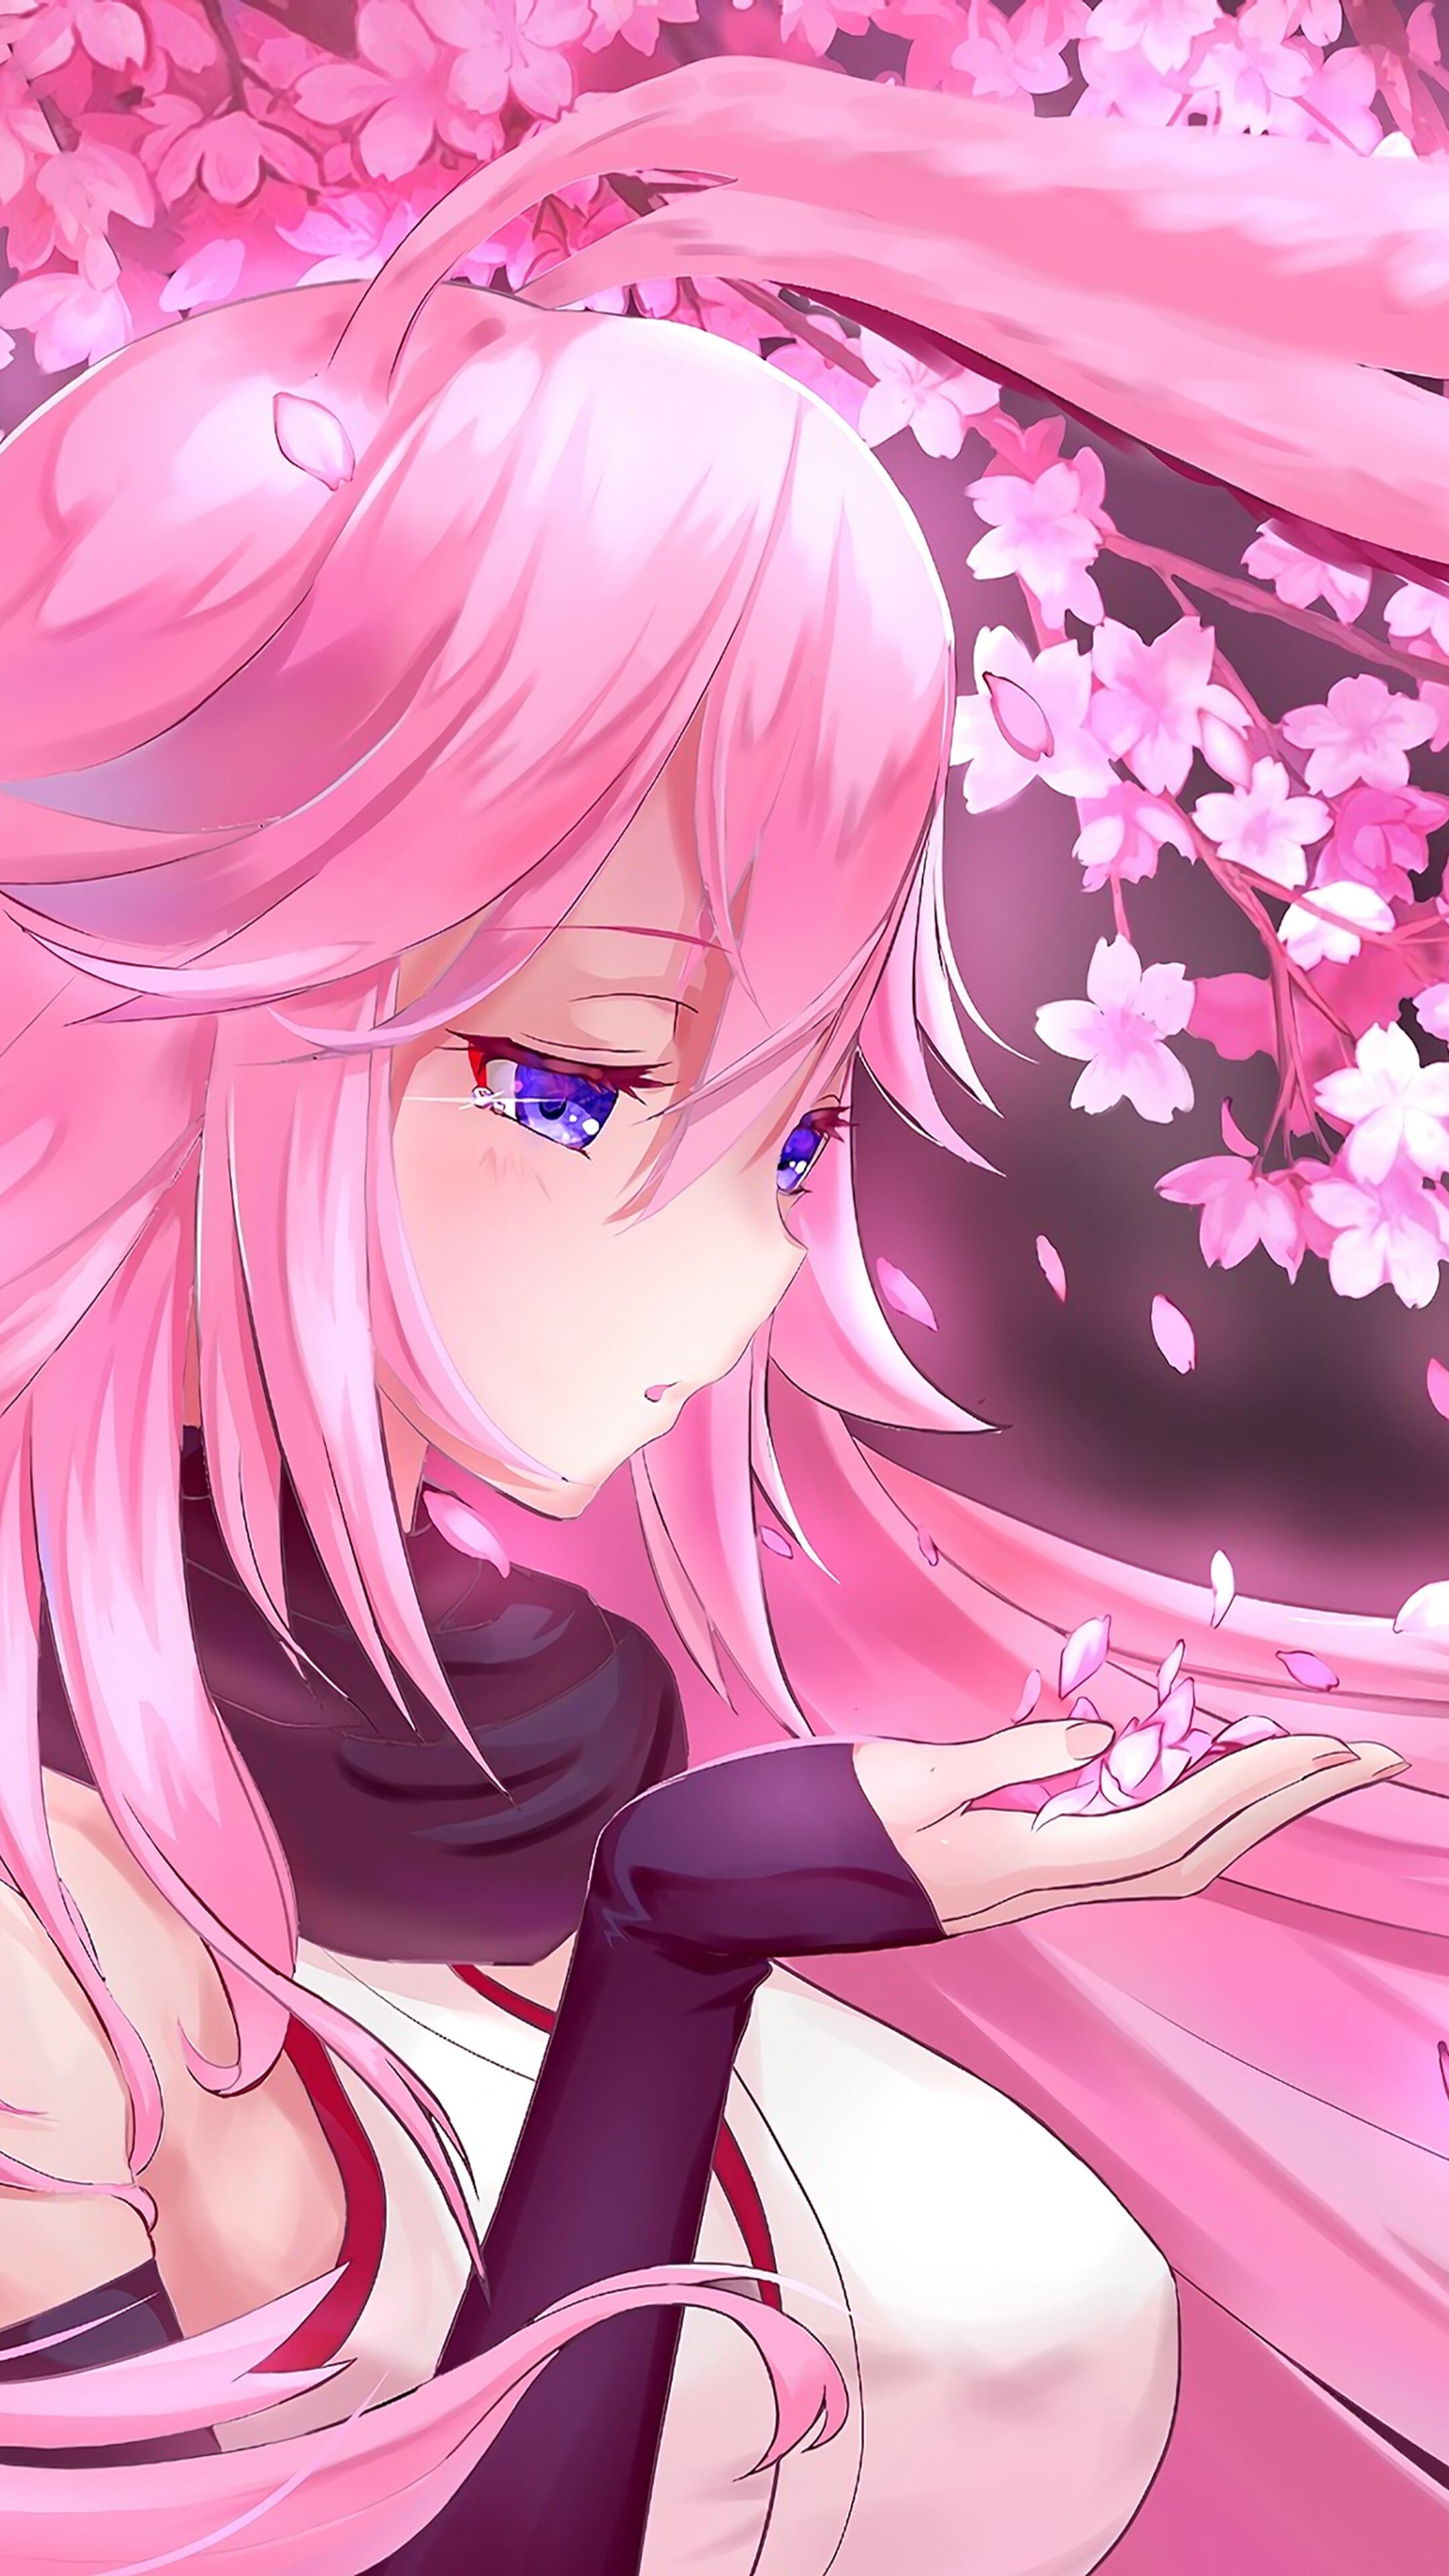 Anime girl - pink rose Wallpaper Download | MobCup